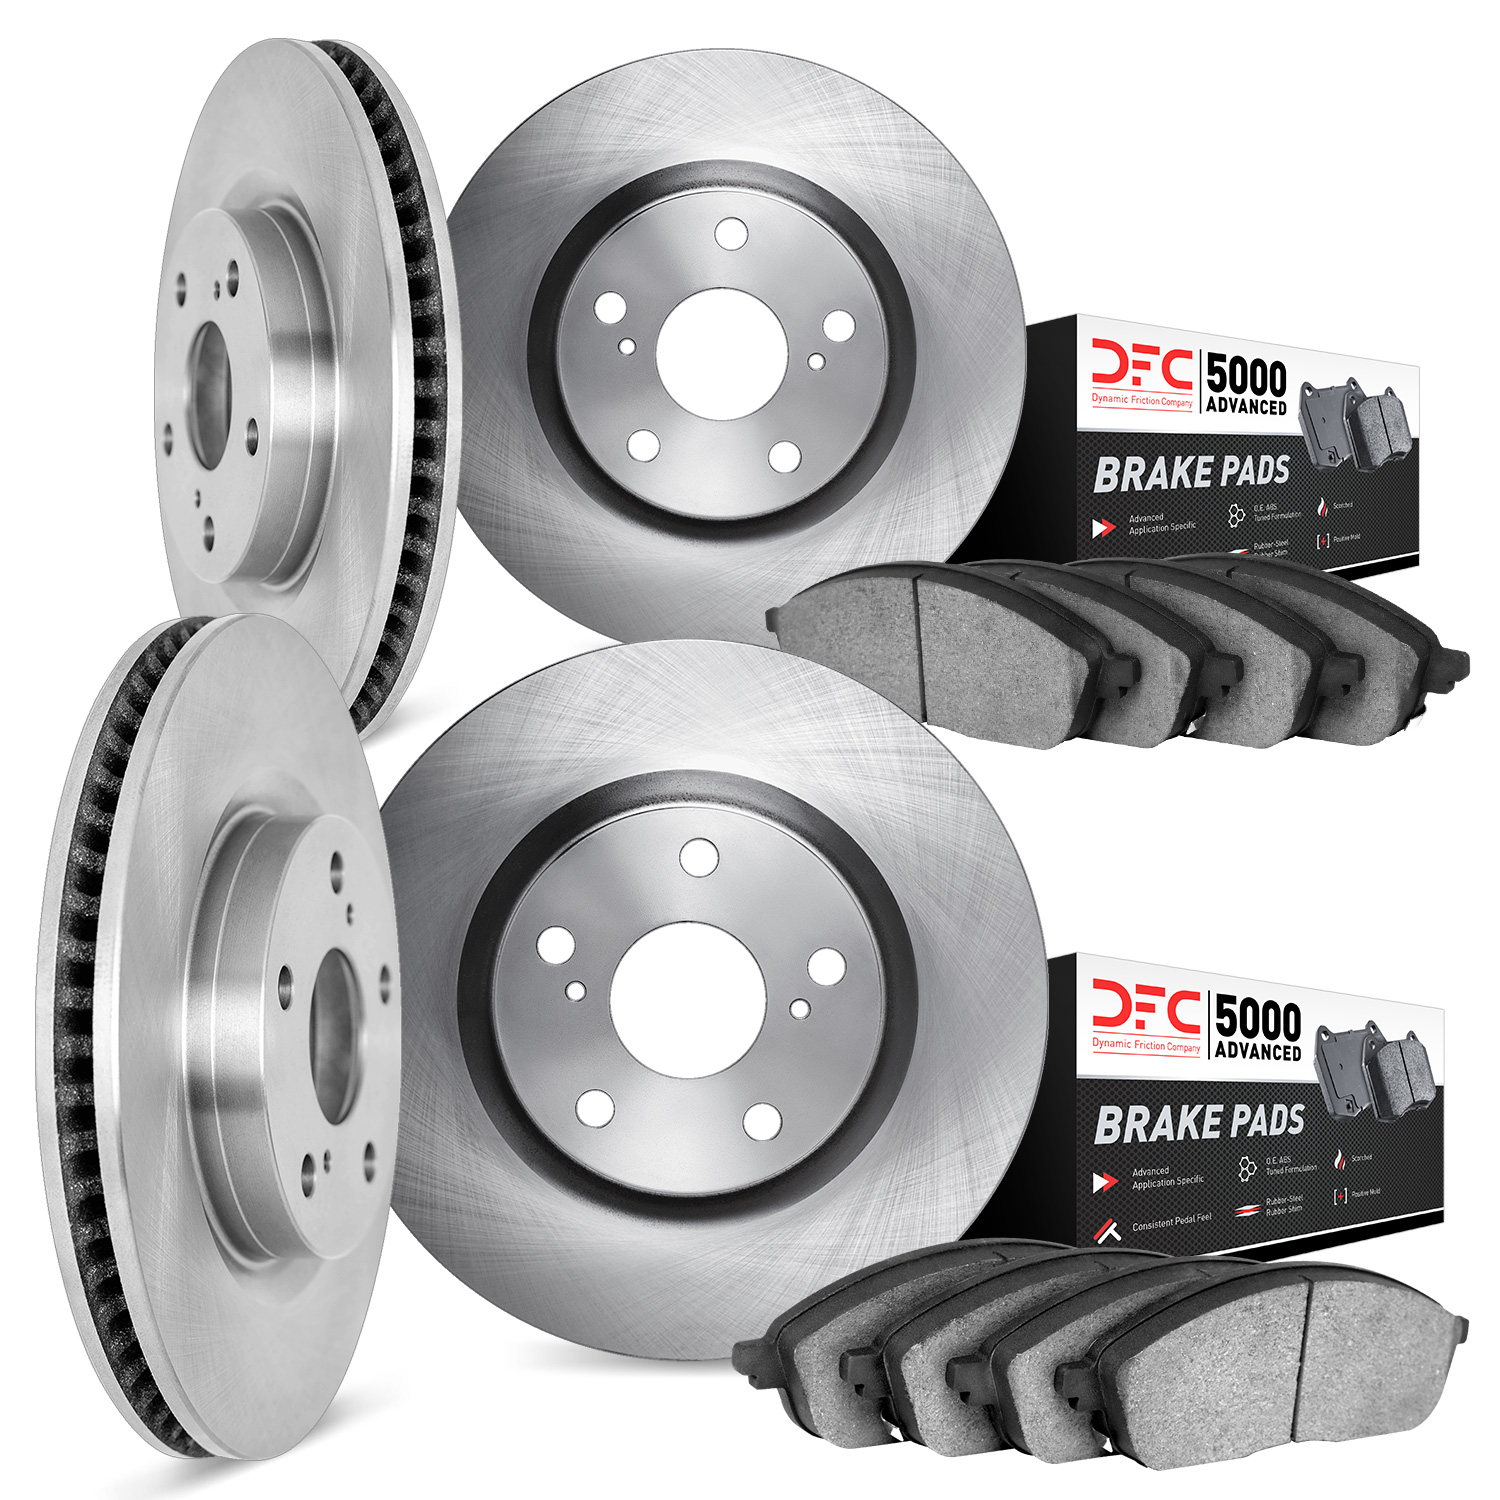 6504-67302 Brake Rotors w/5000 Advanced Brake Pads Kit, Fits Select Infiniti/Nissan, Position: Front and Rear